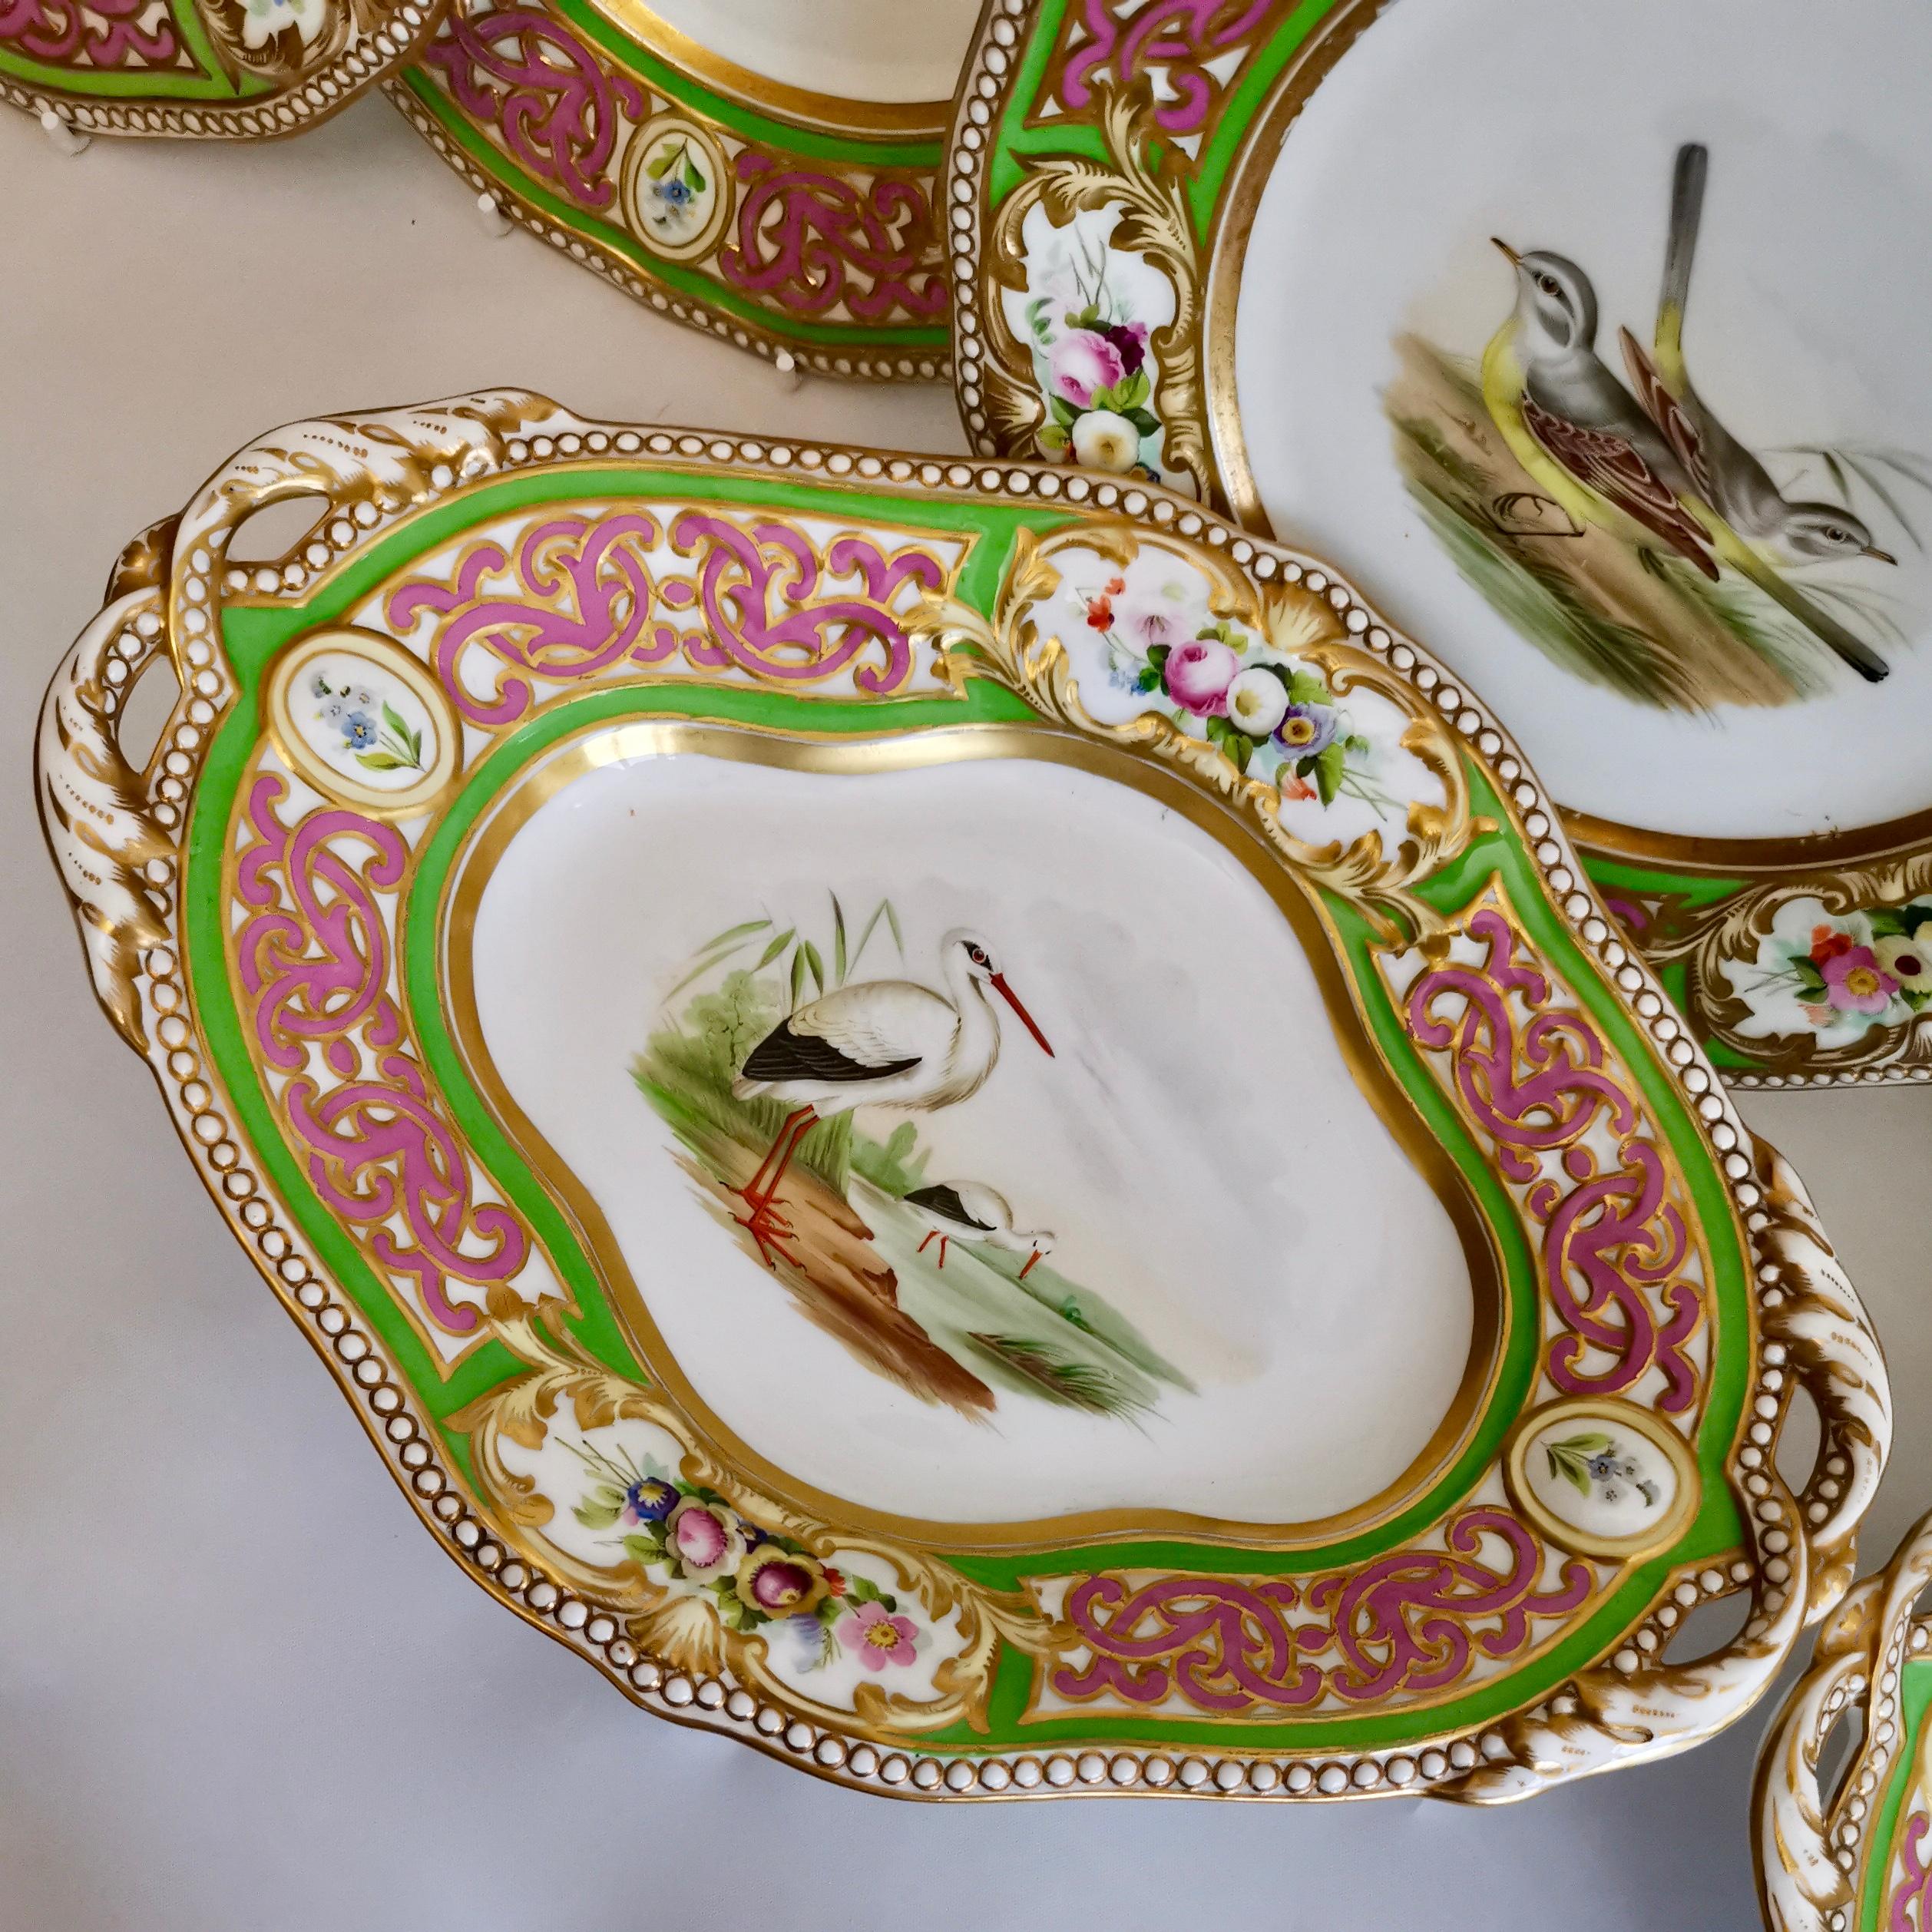 Victorian Grainger Worcester Porcelain Dessert Service, Persian Revival with Birds, 1855